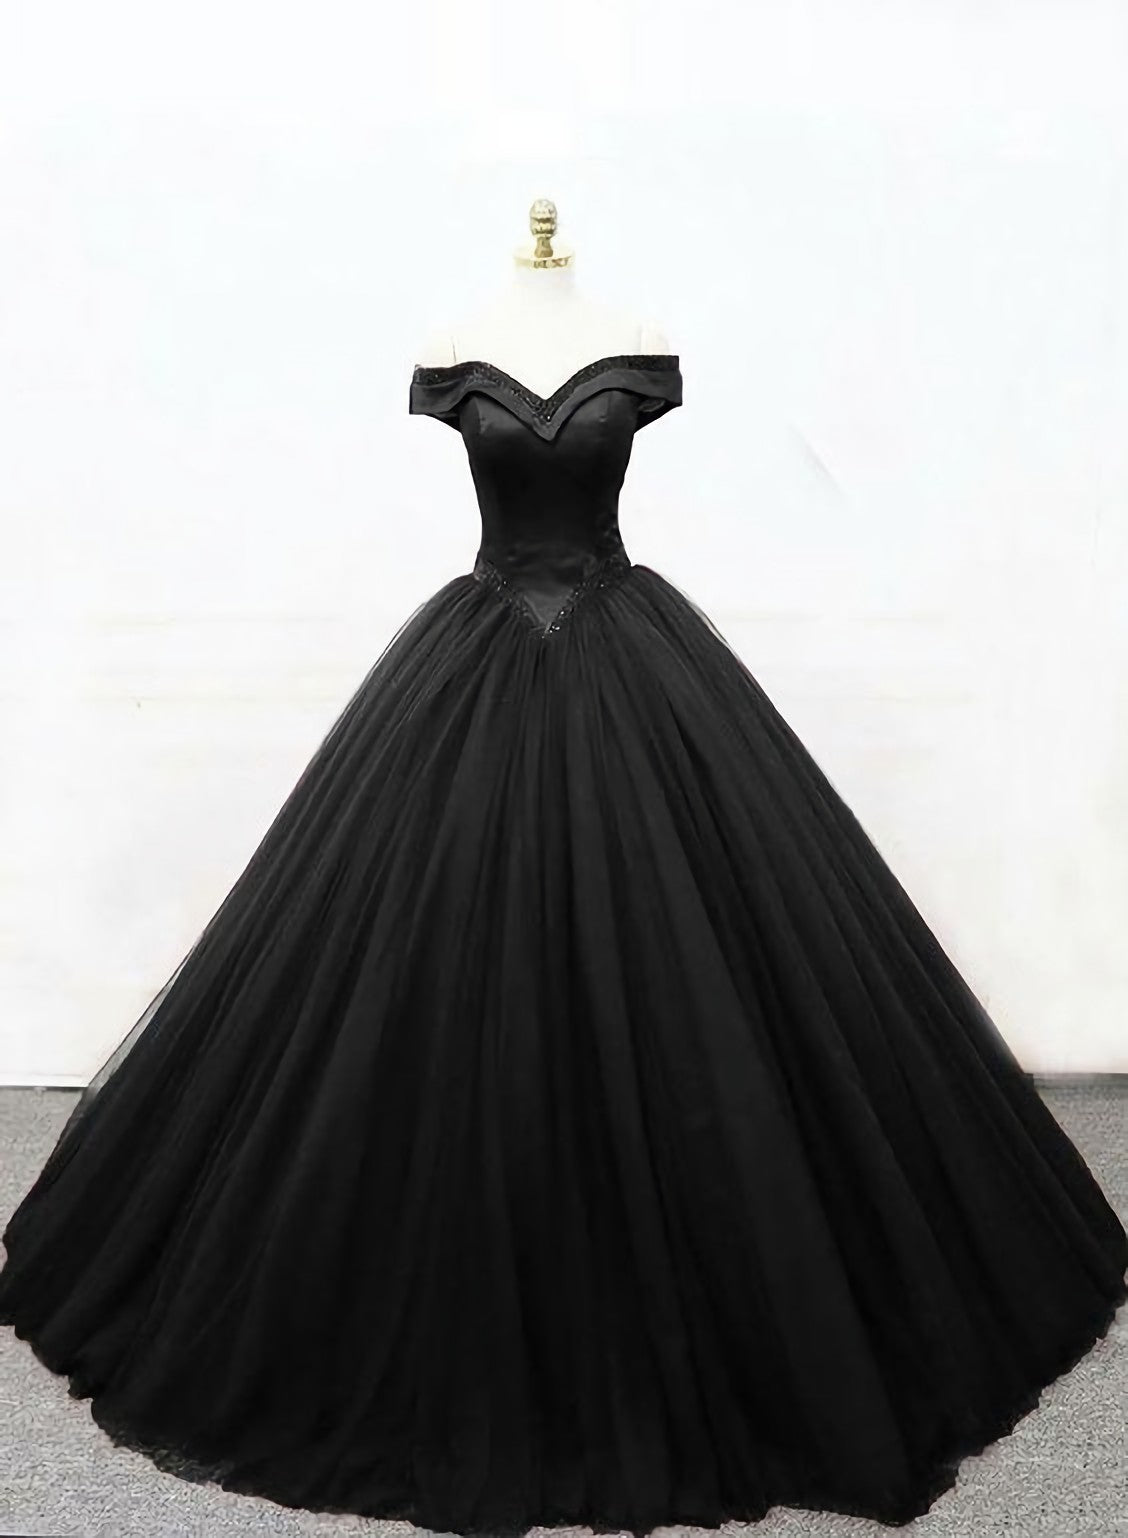 Satin Dress, Black Princess Ball Gown Black Formal Prom Dress